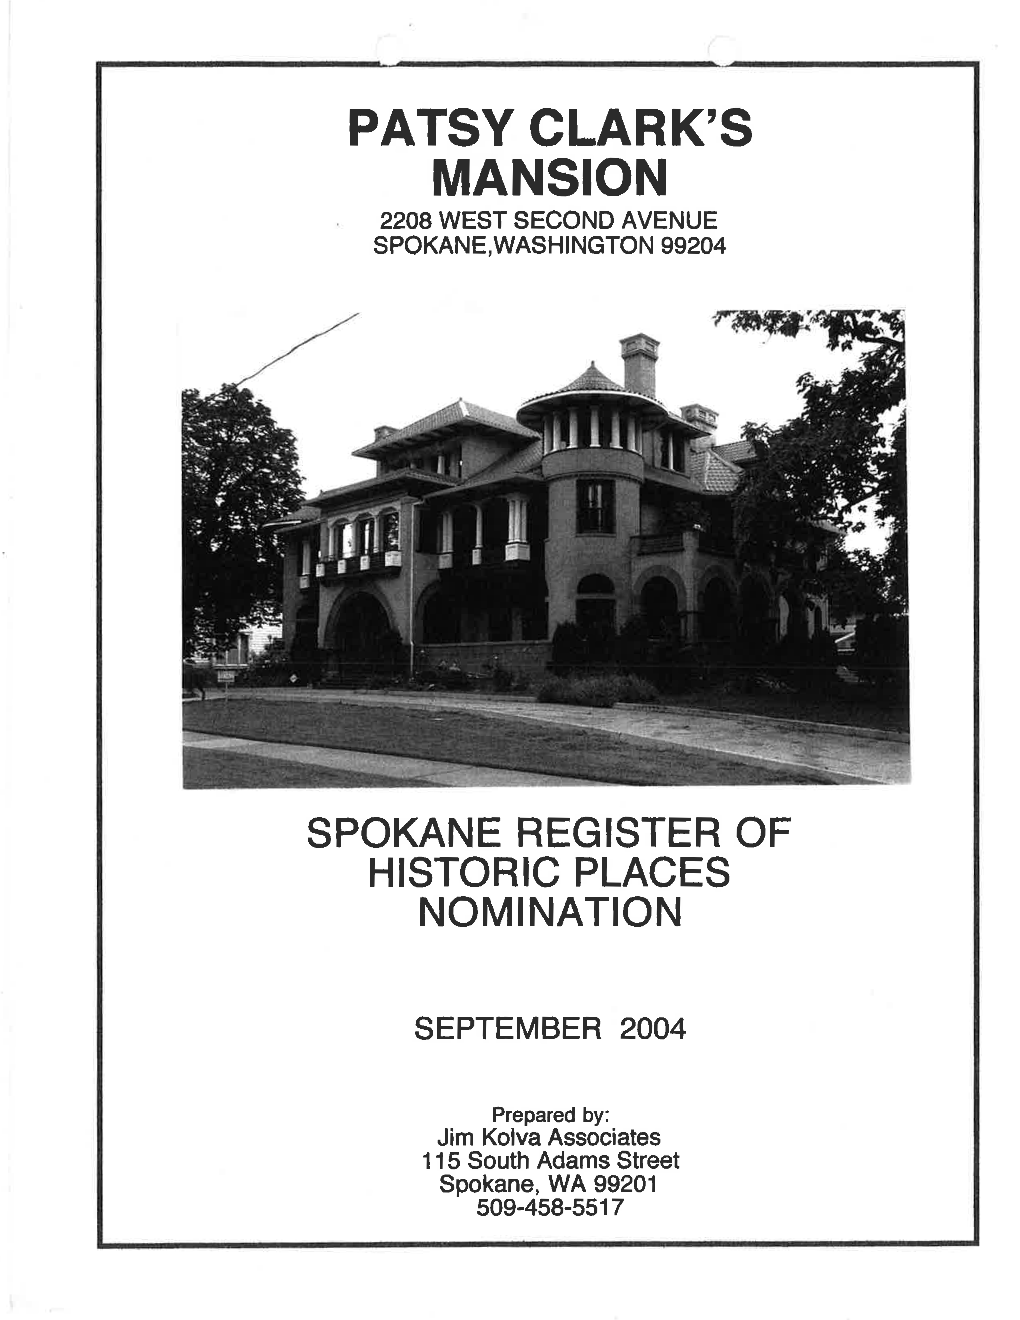 Nomination (PDF)